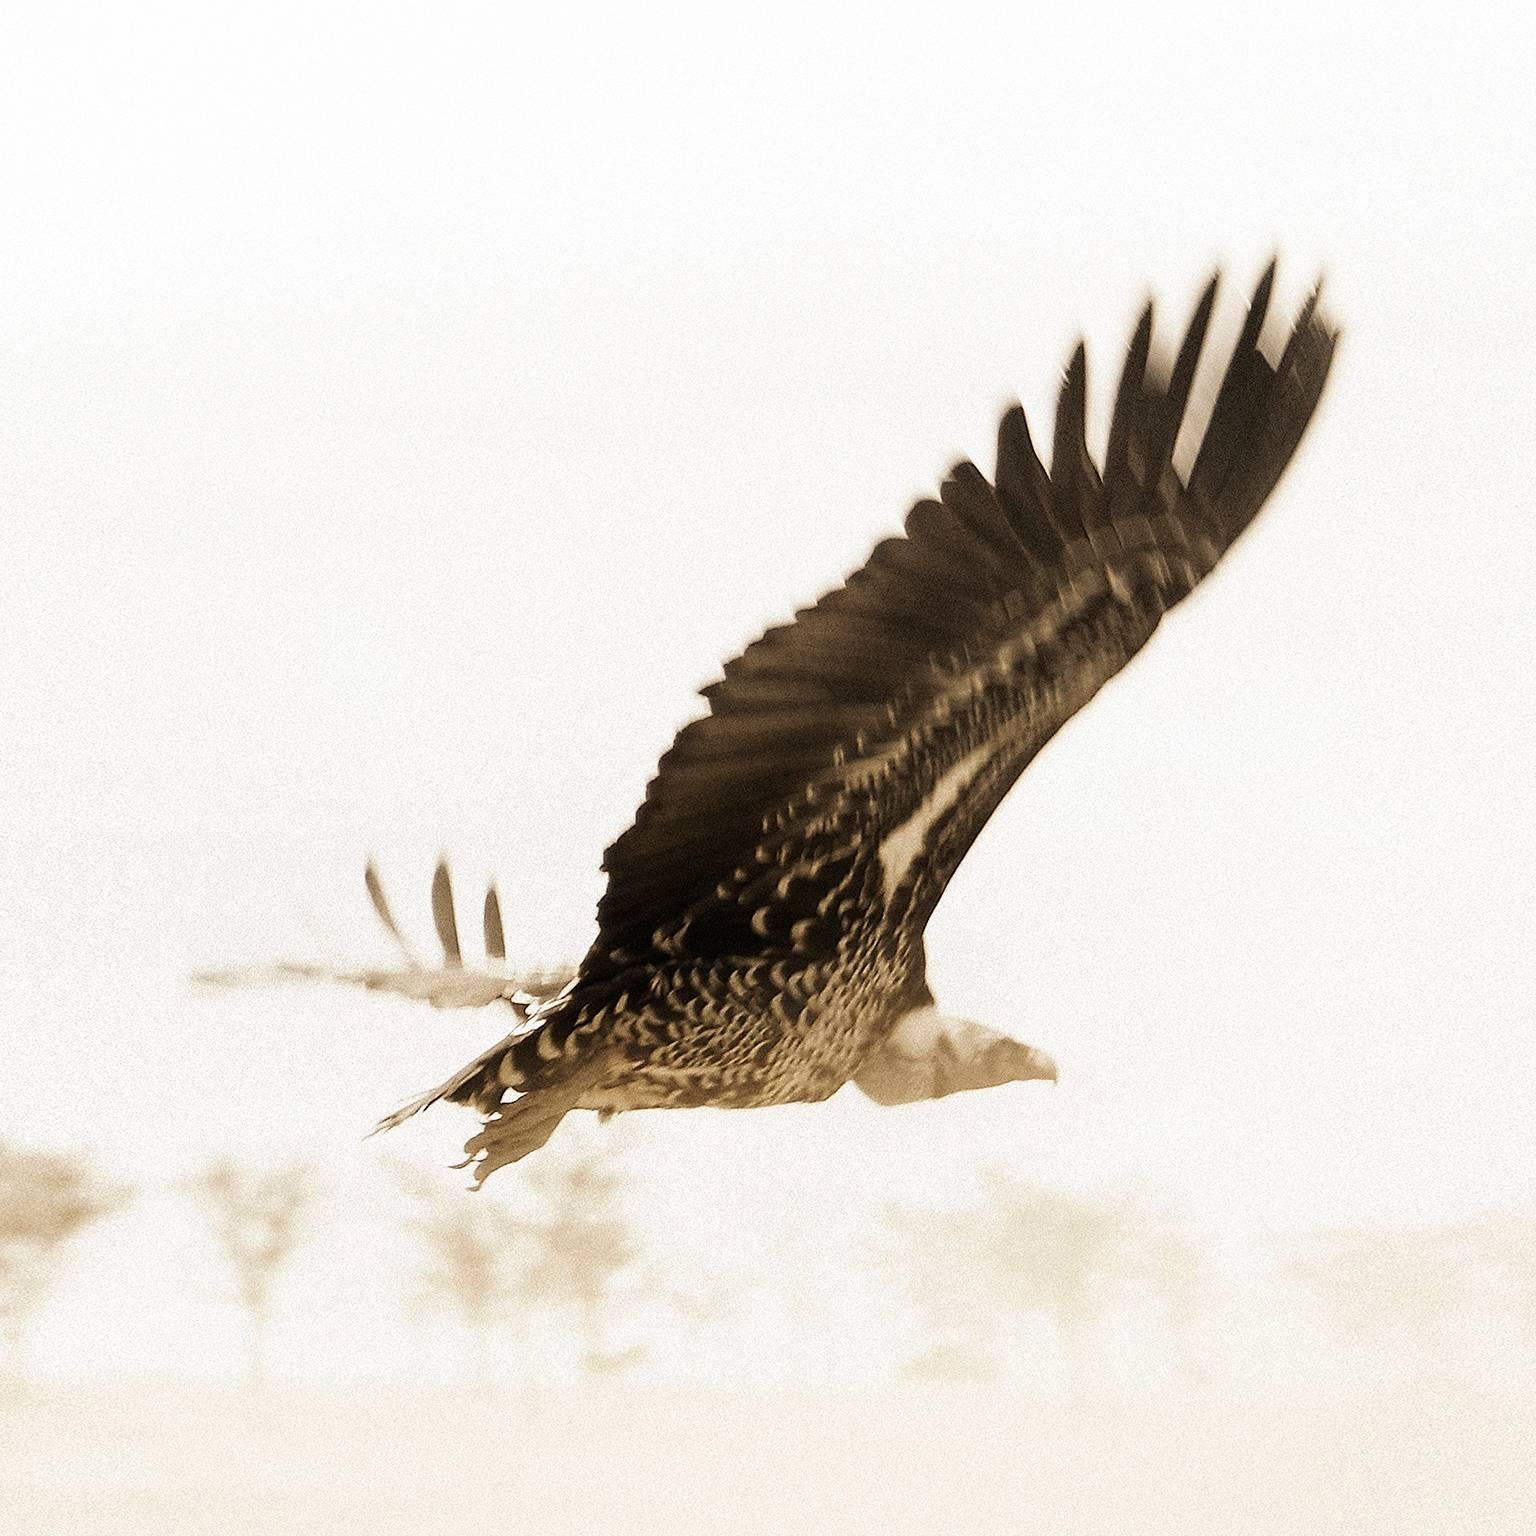 Africa Bird, Tanzania - Photograph by Chris Gordaneer